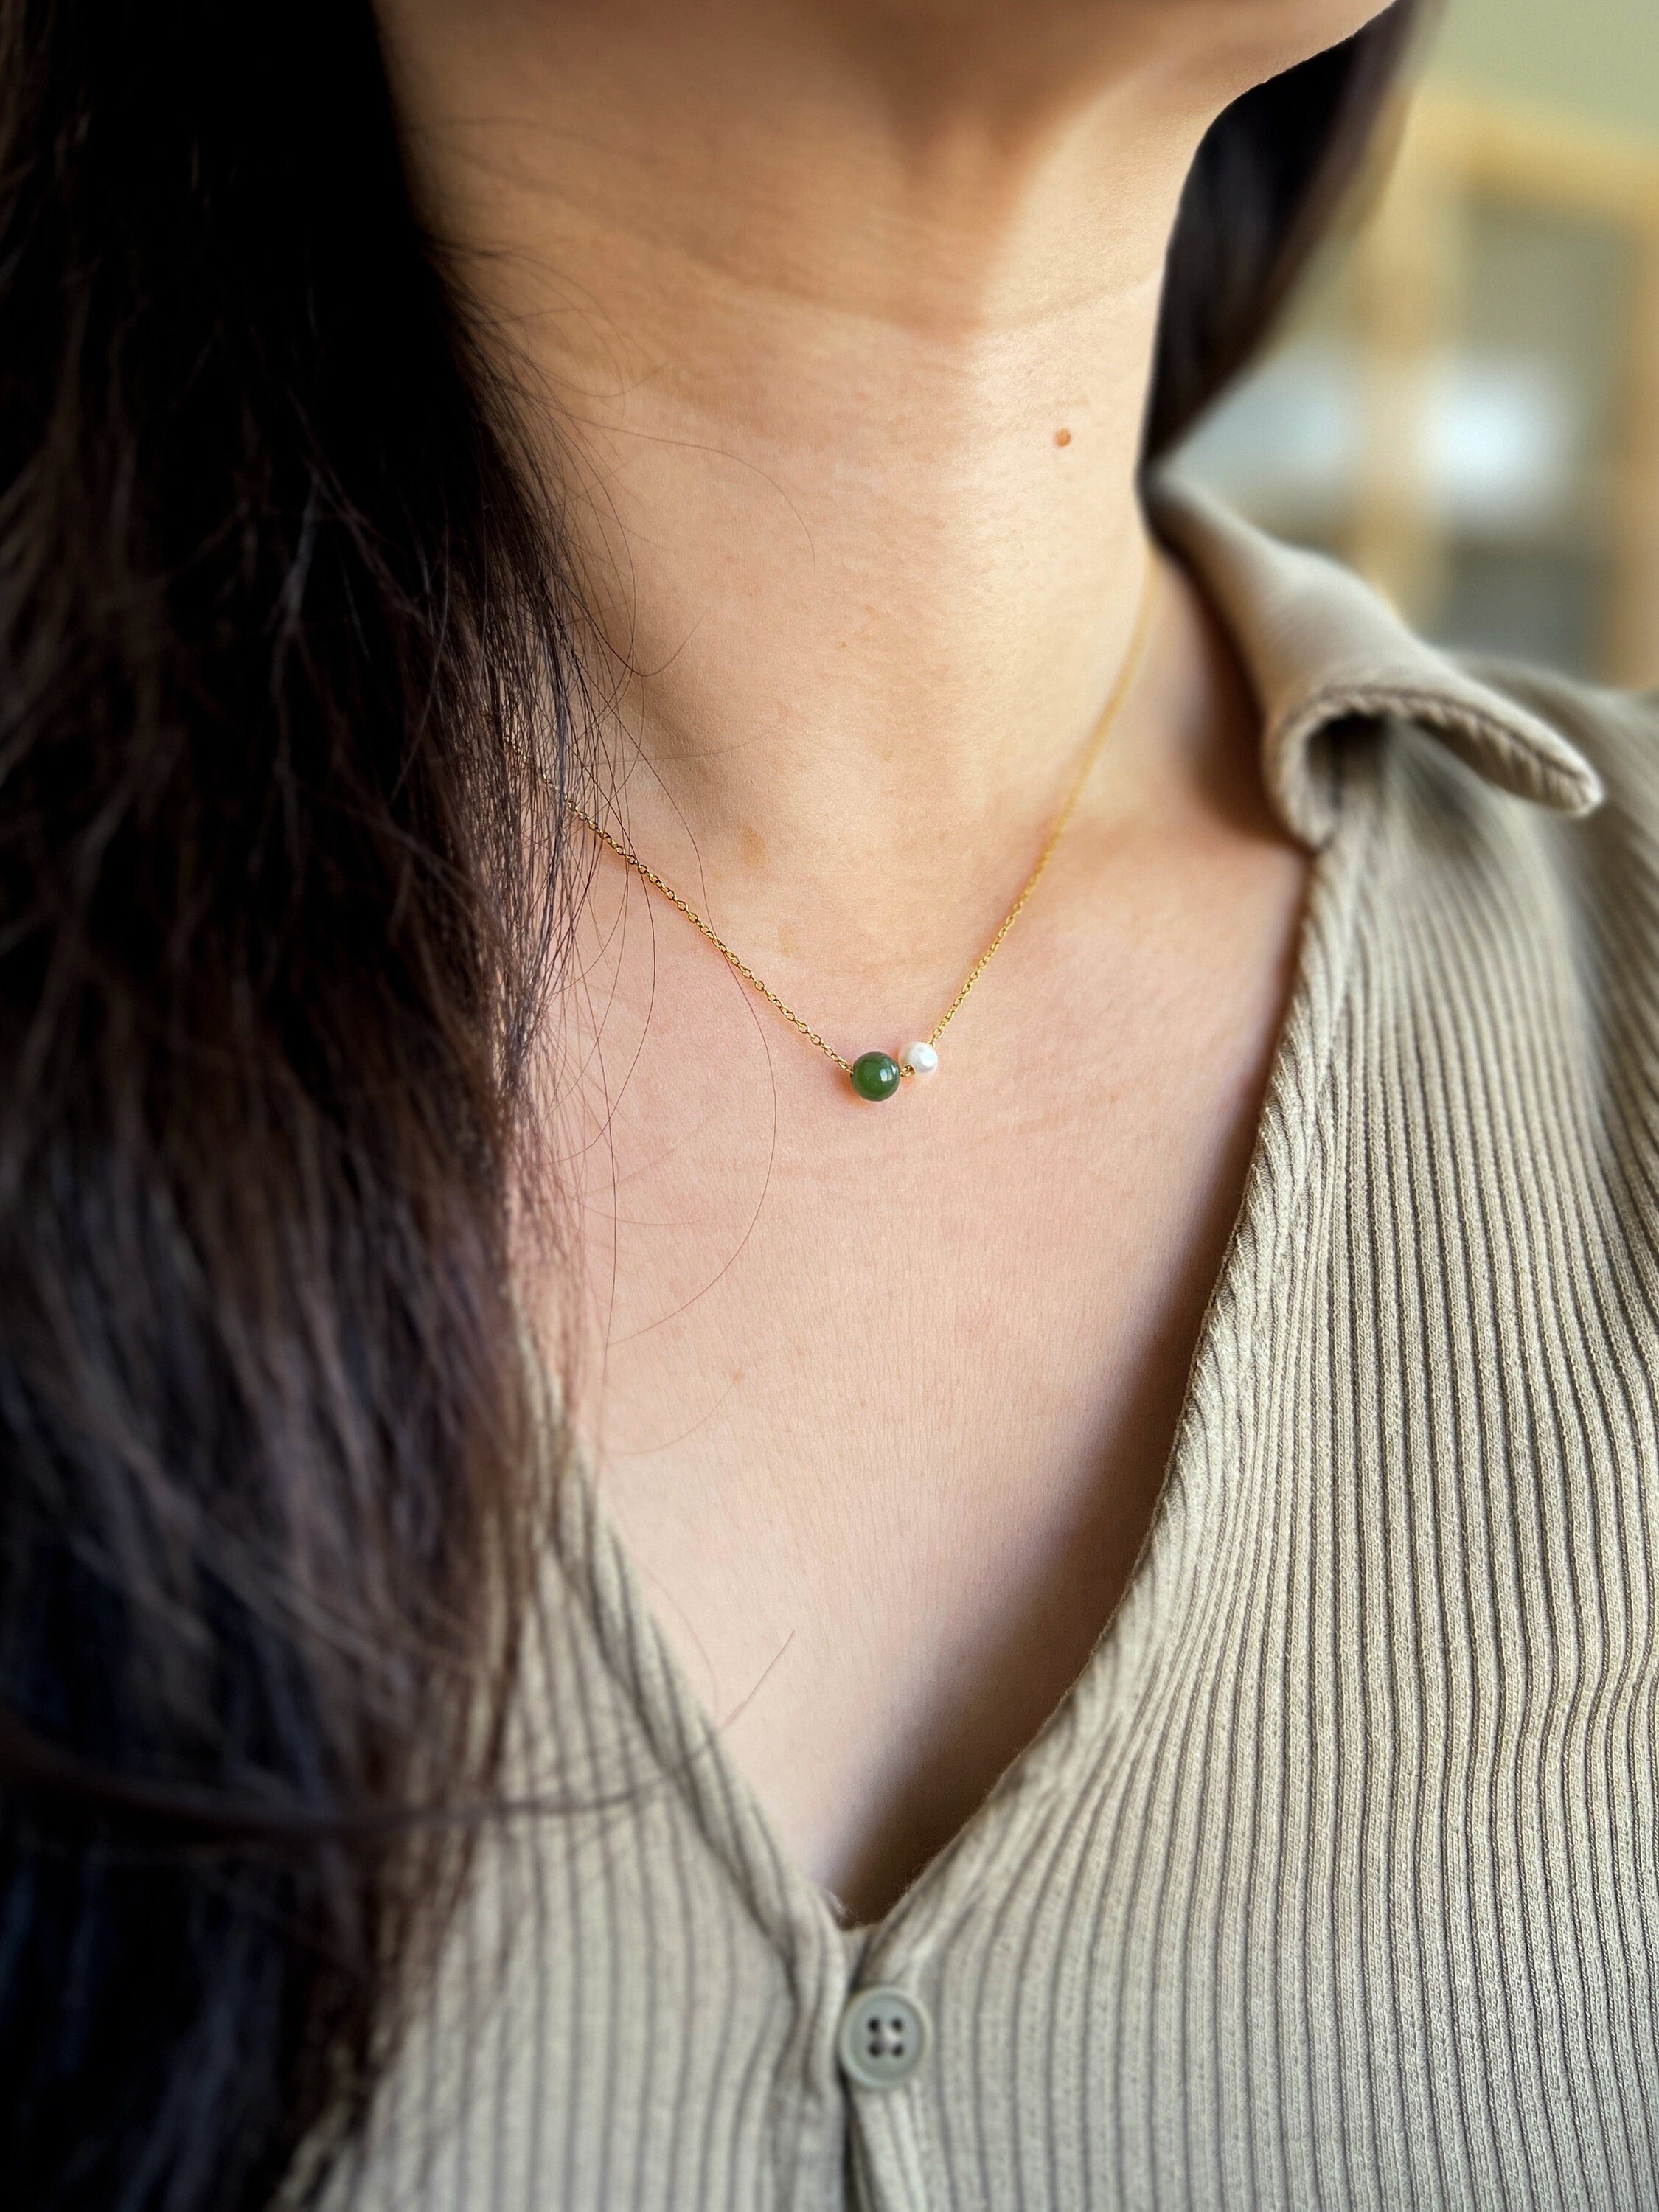 How to Make Jadeite Beaded Necklace DIY Jewelry Tutorials - YouTube